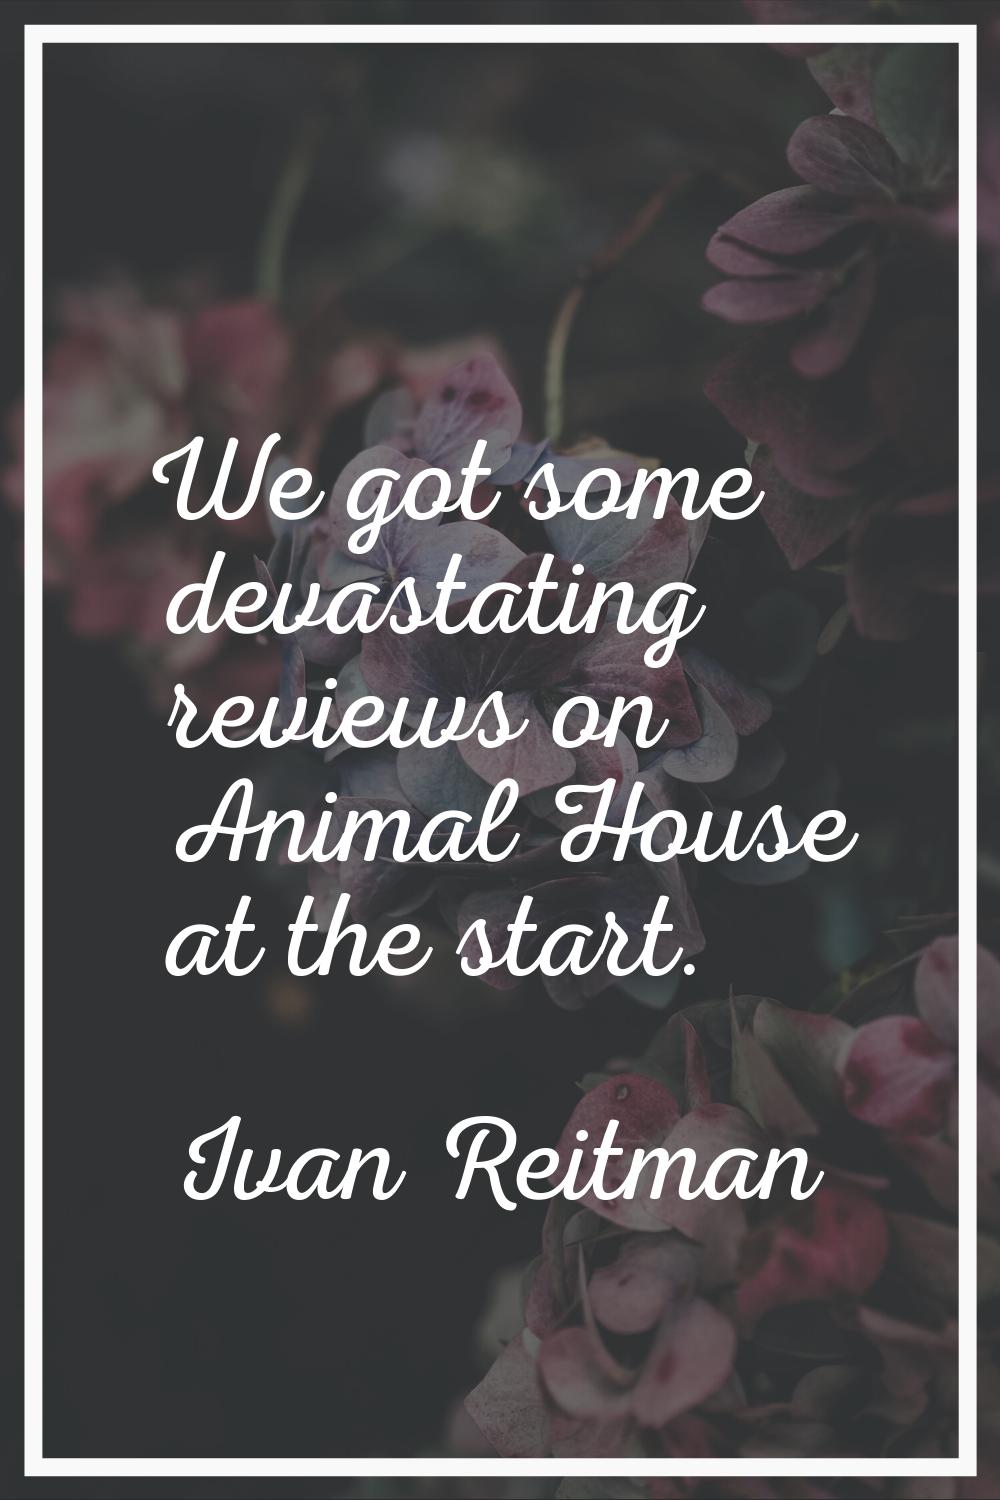 We got some devastating reviews on Animal House at the start.